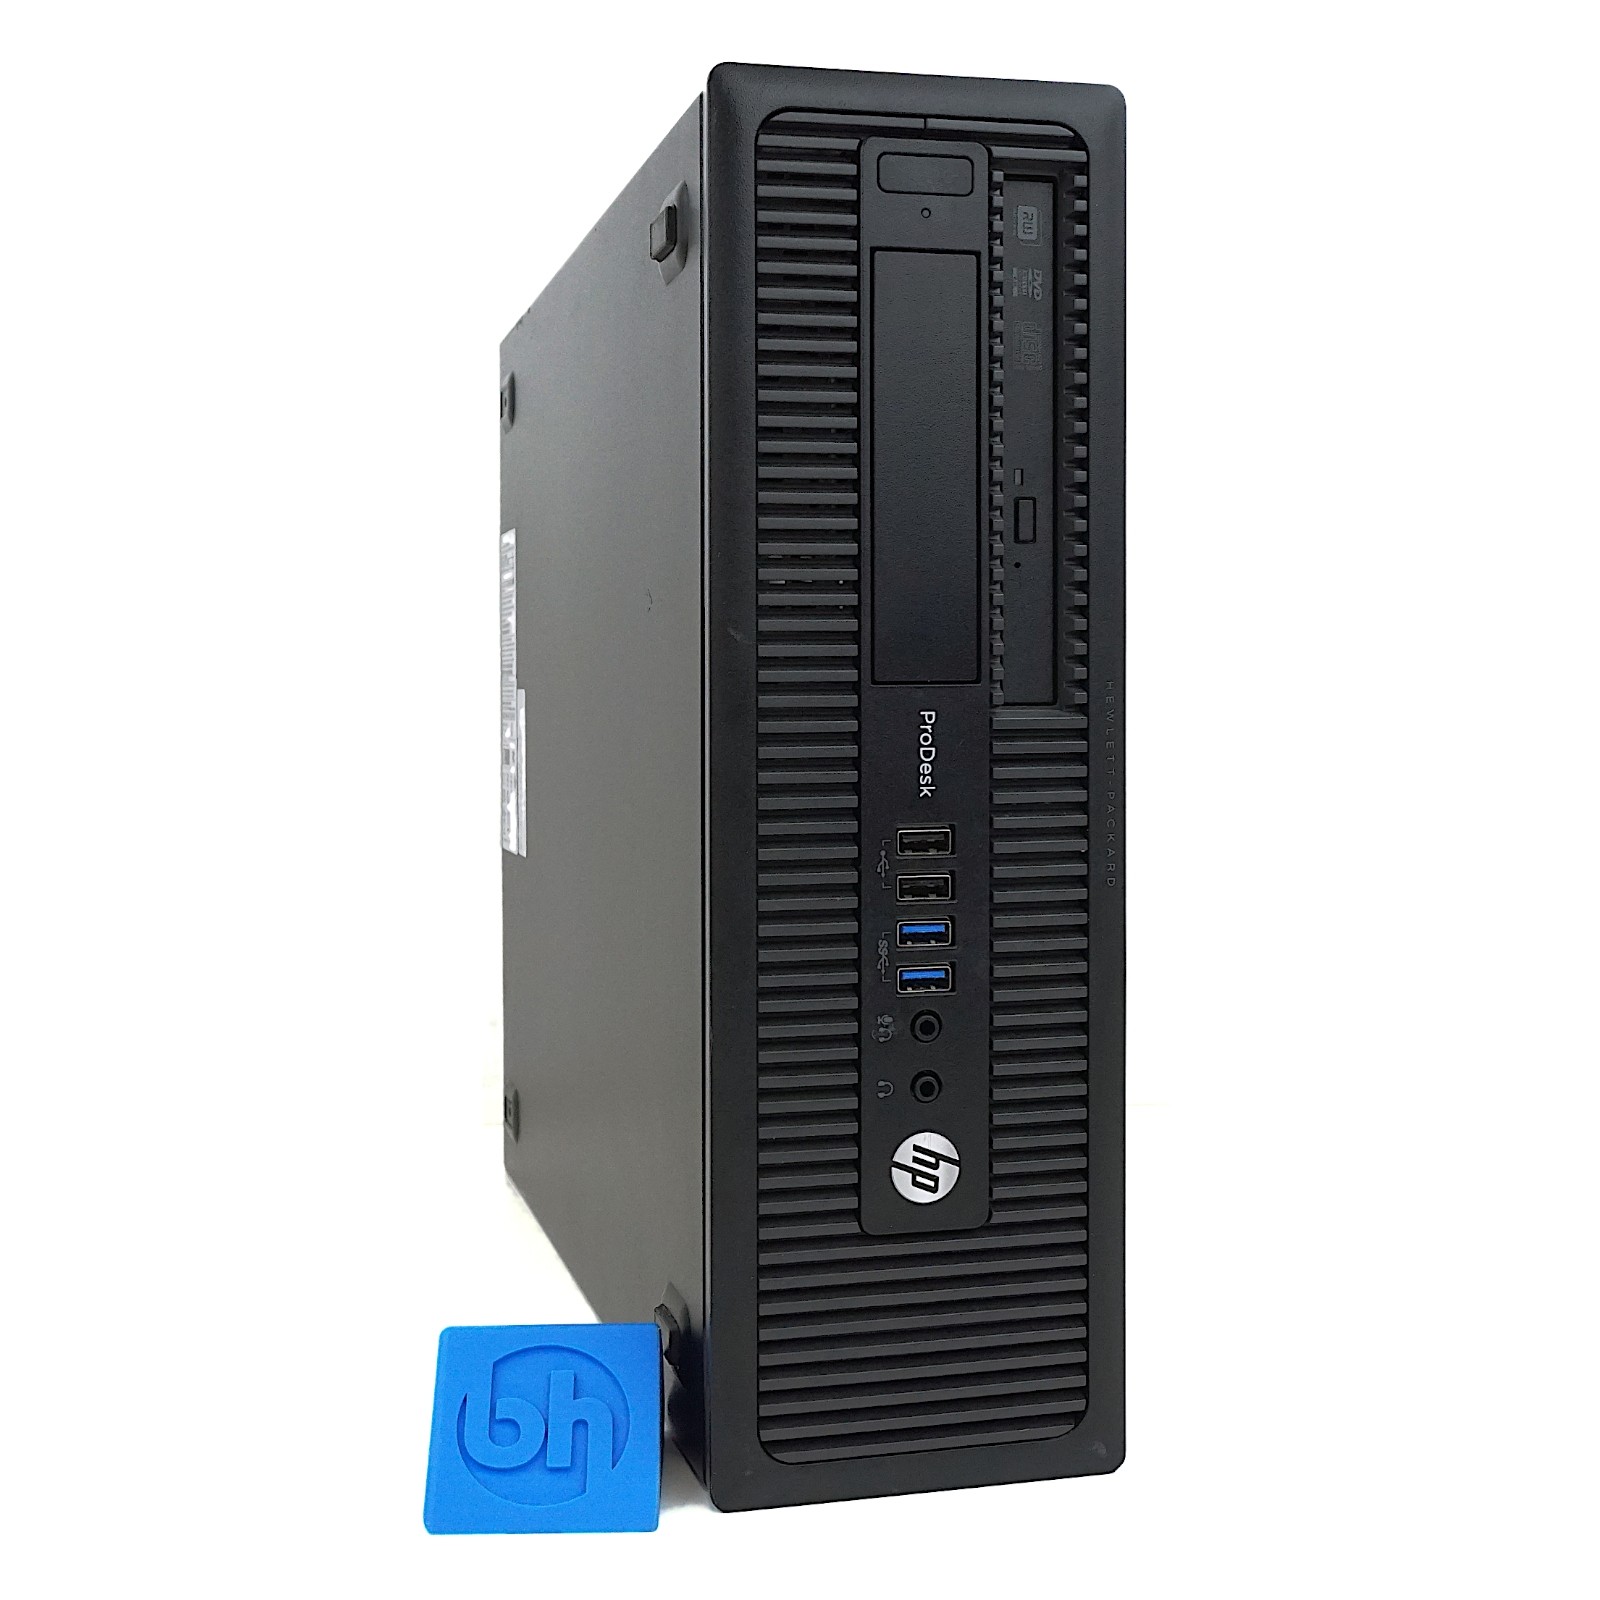 HP ProDesk 600 G1 SFF Desktop PC